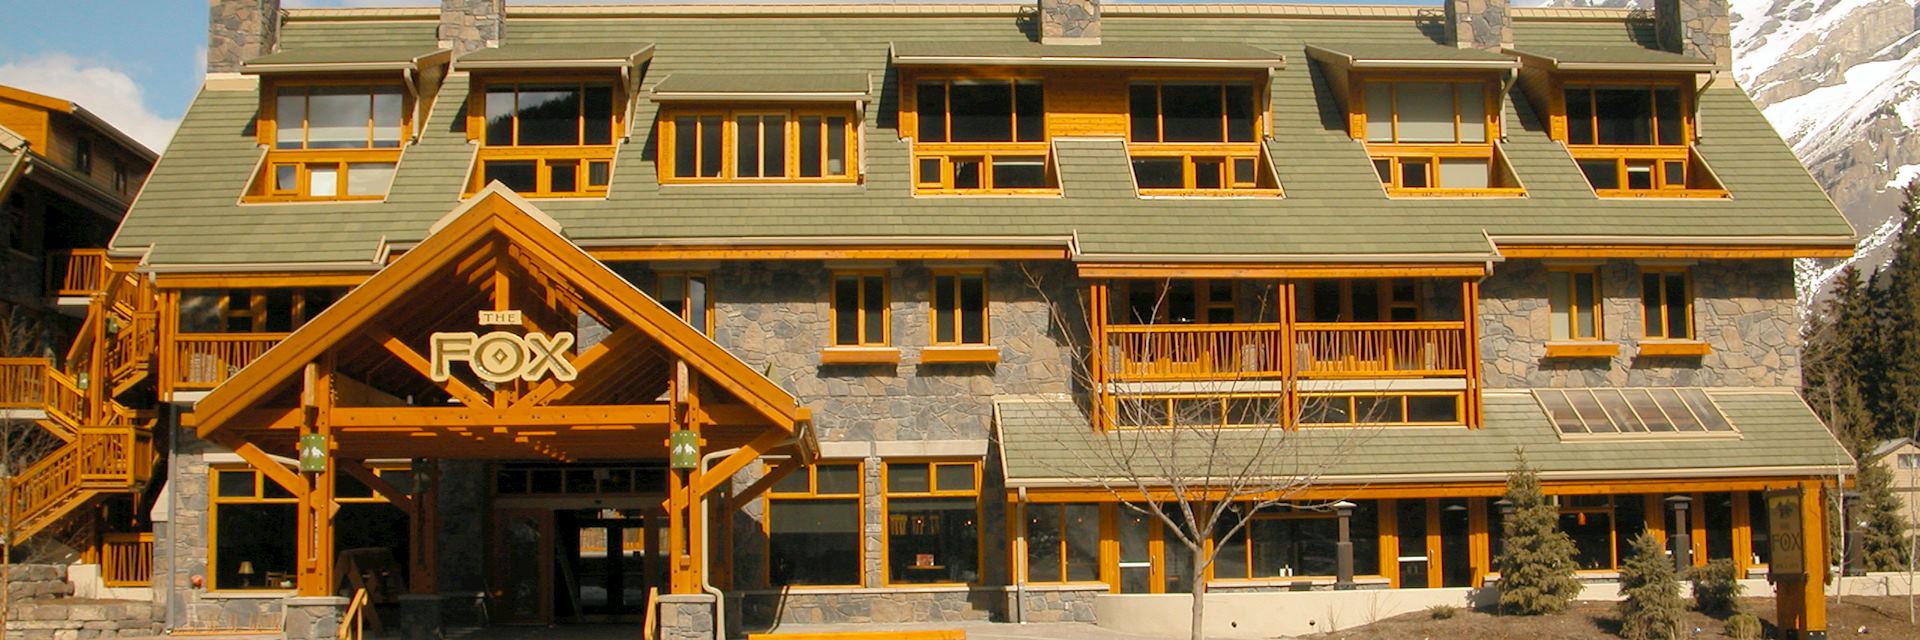 The Fox Hotel & Suites, Banff